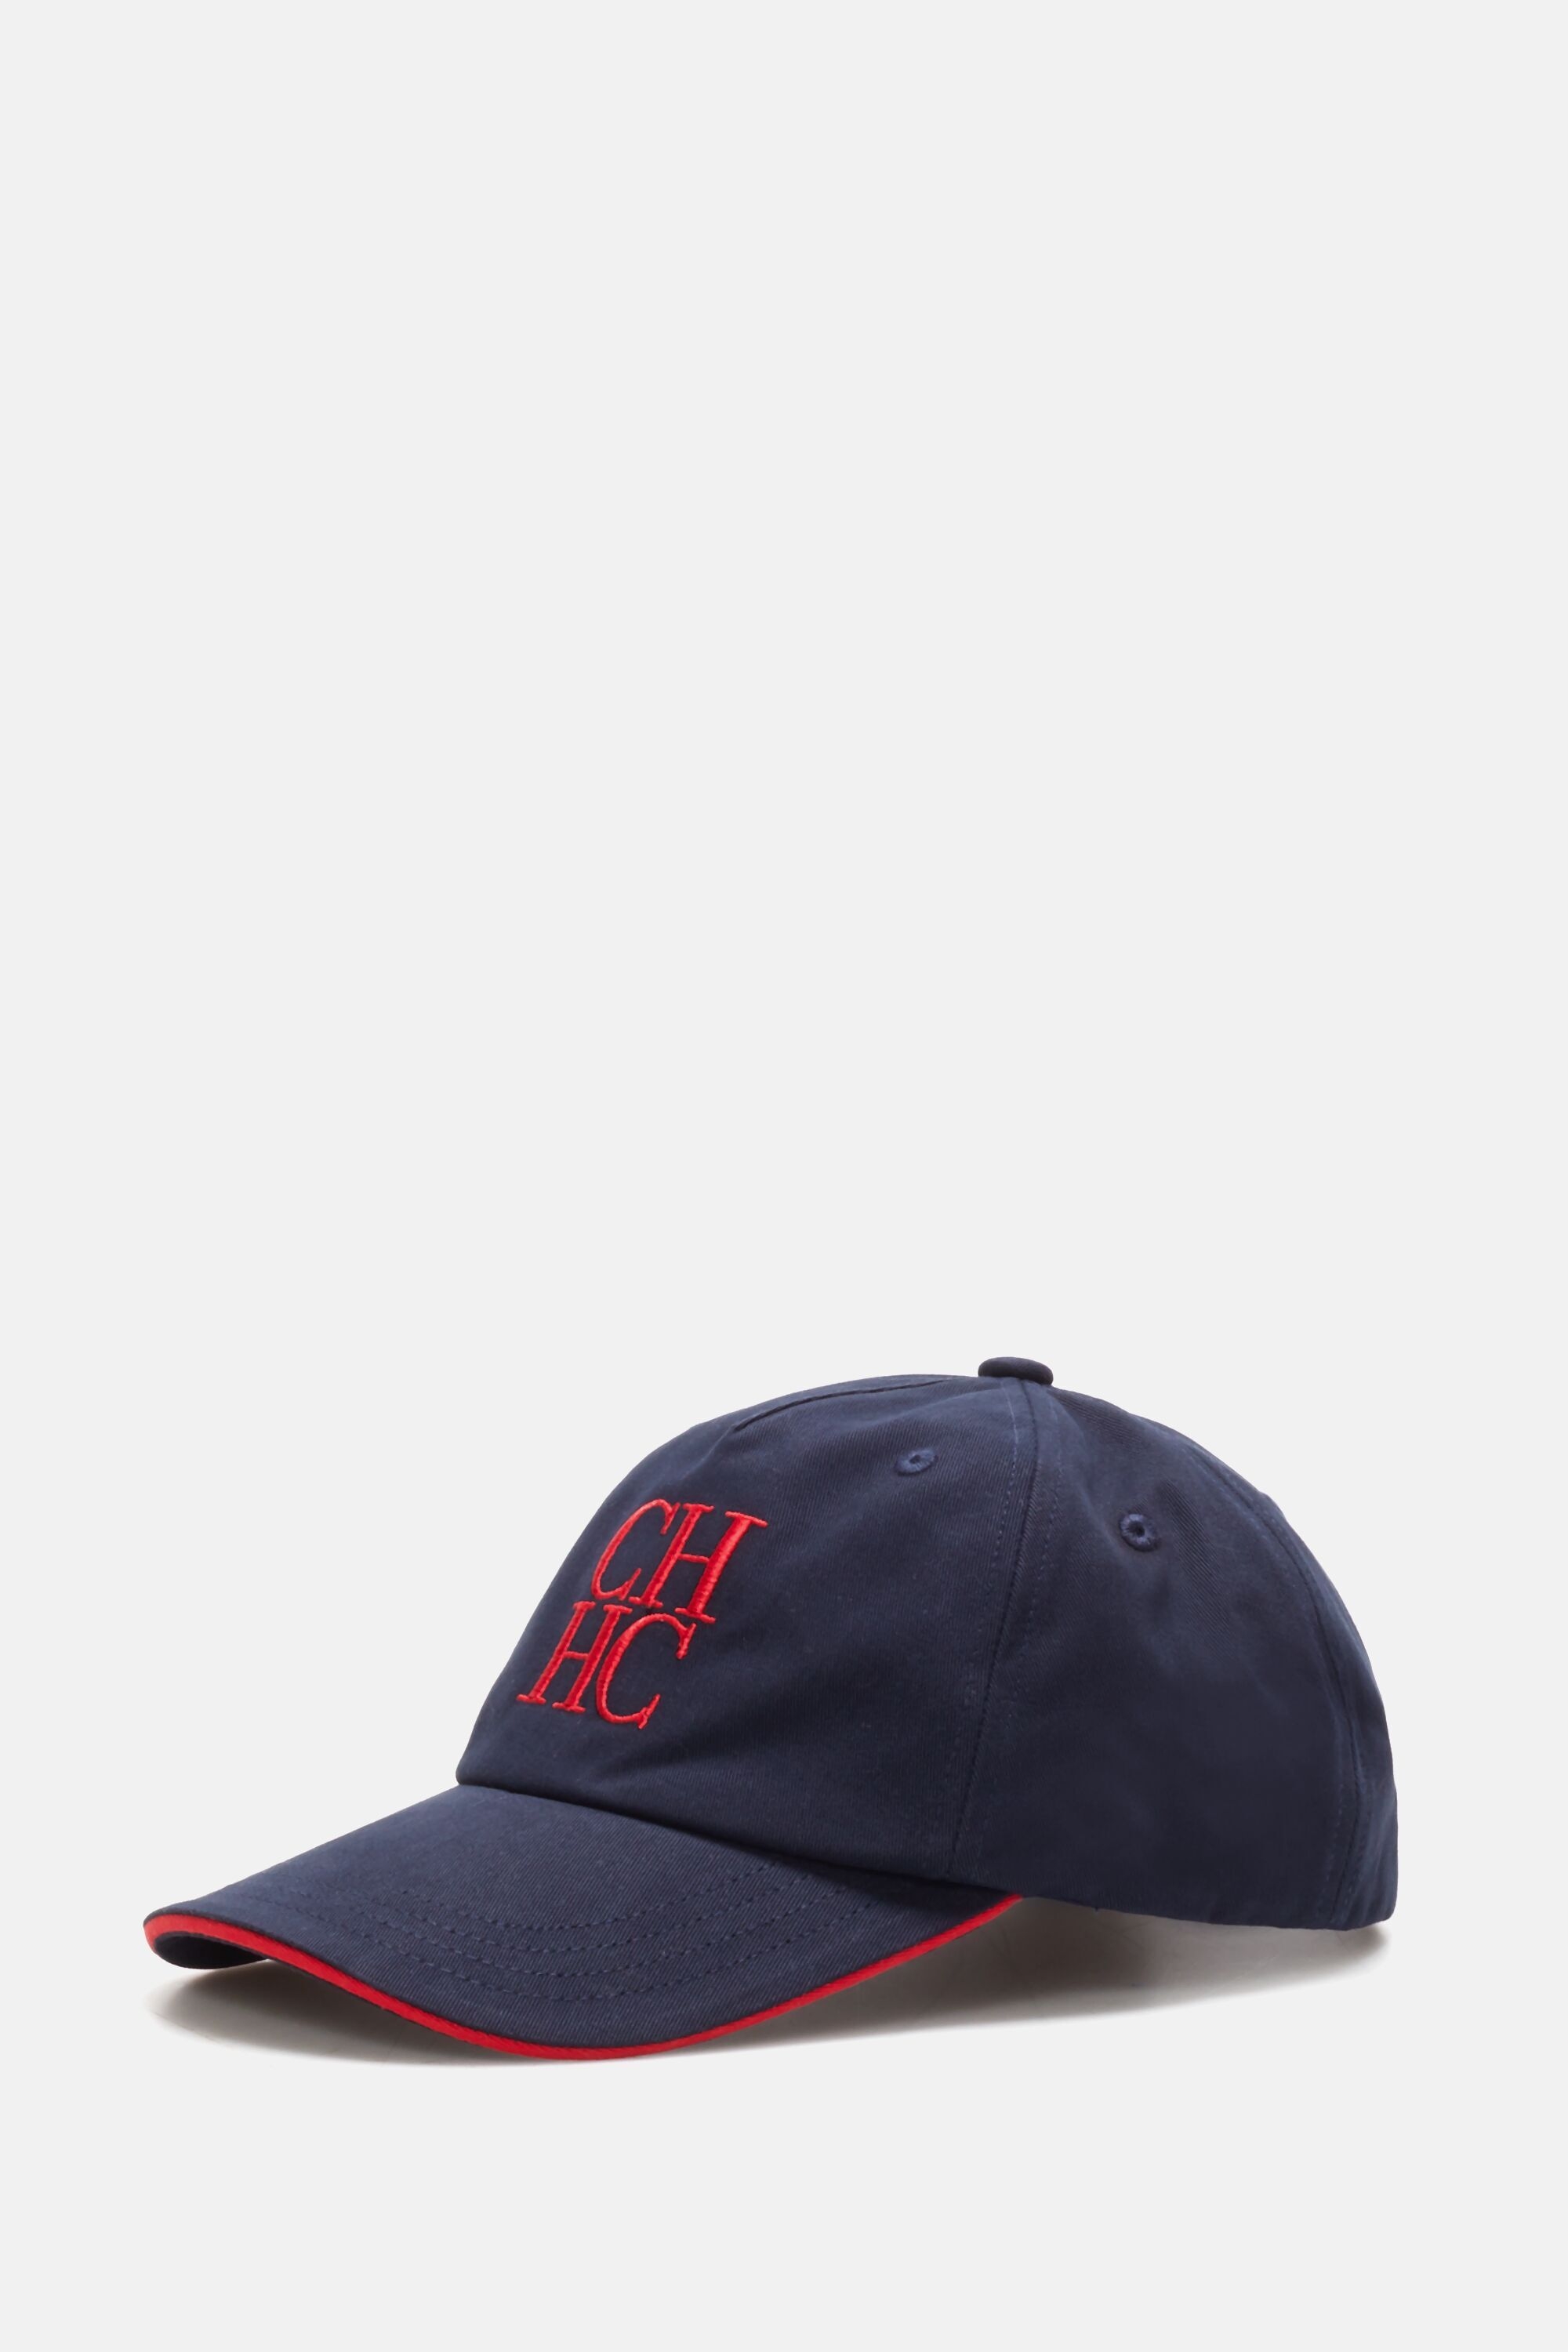 CH baseball cap